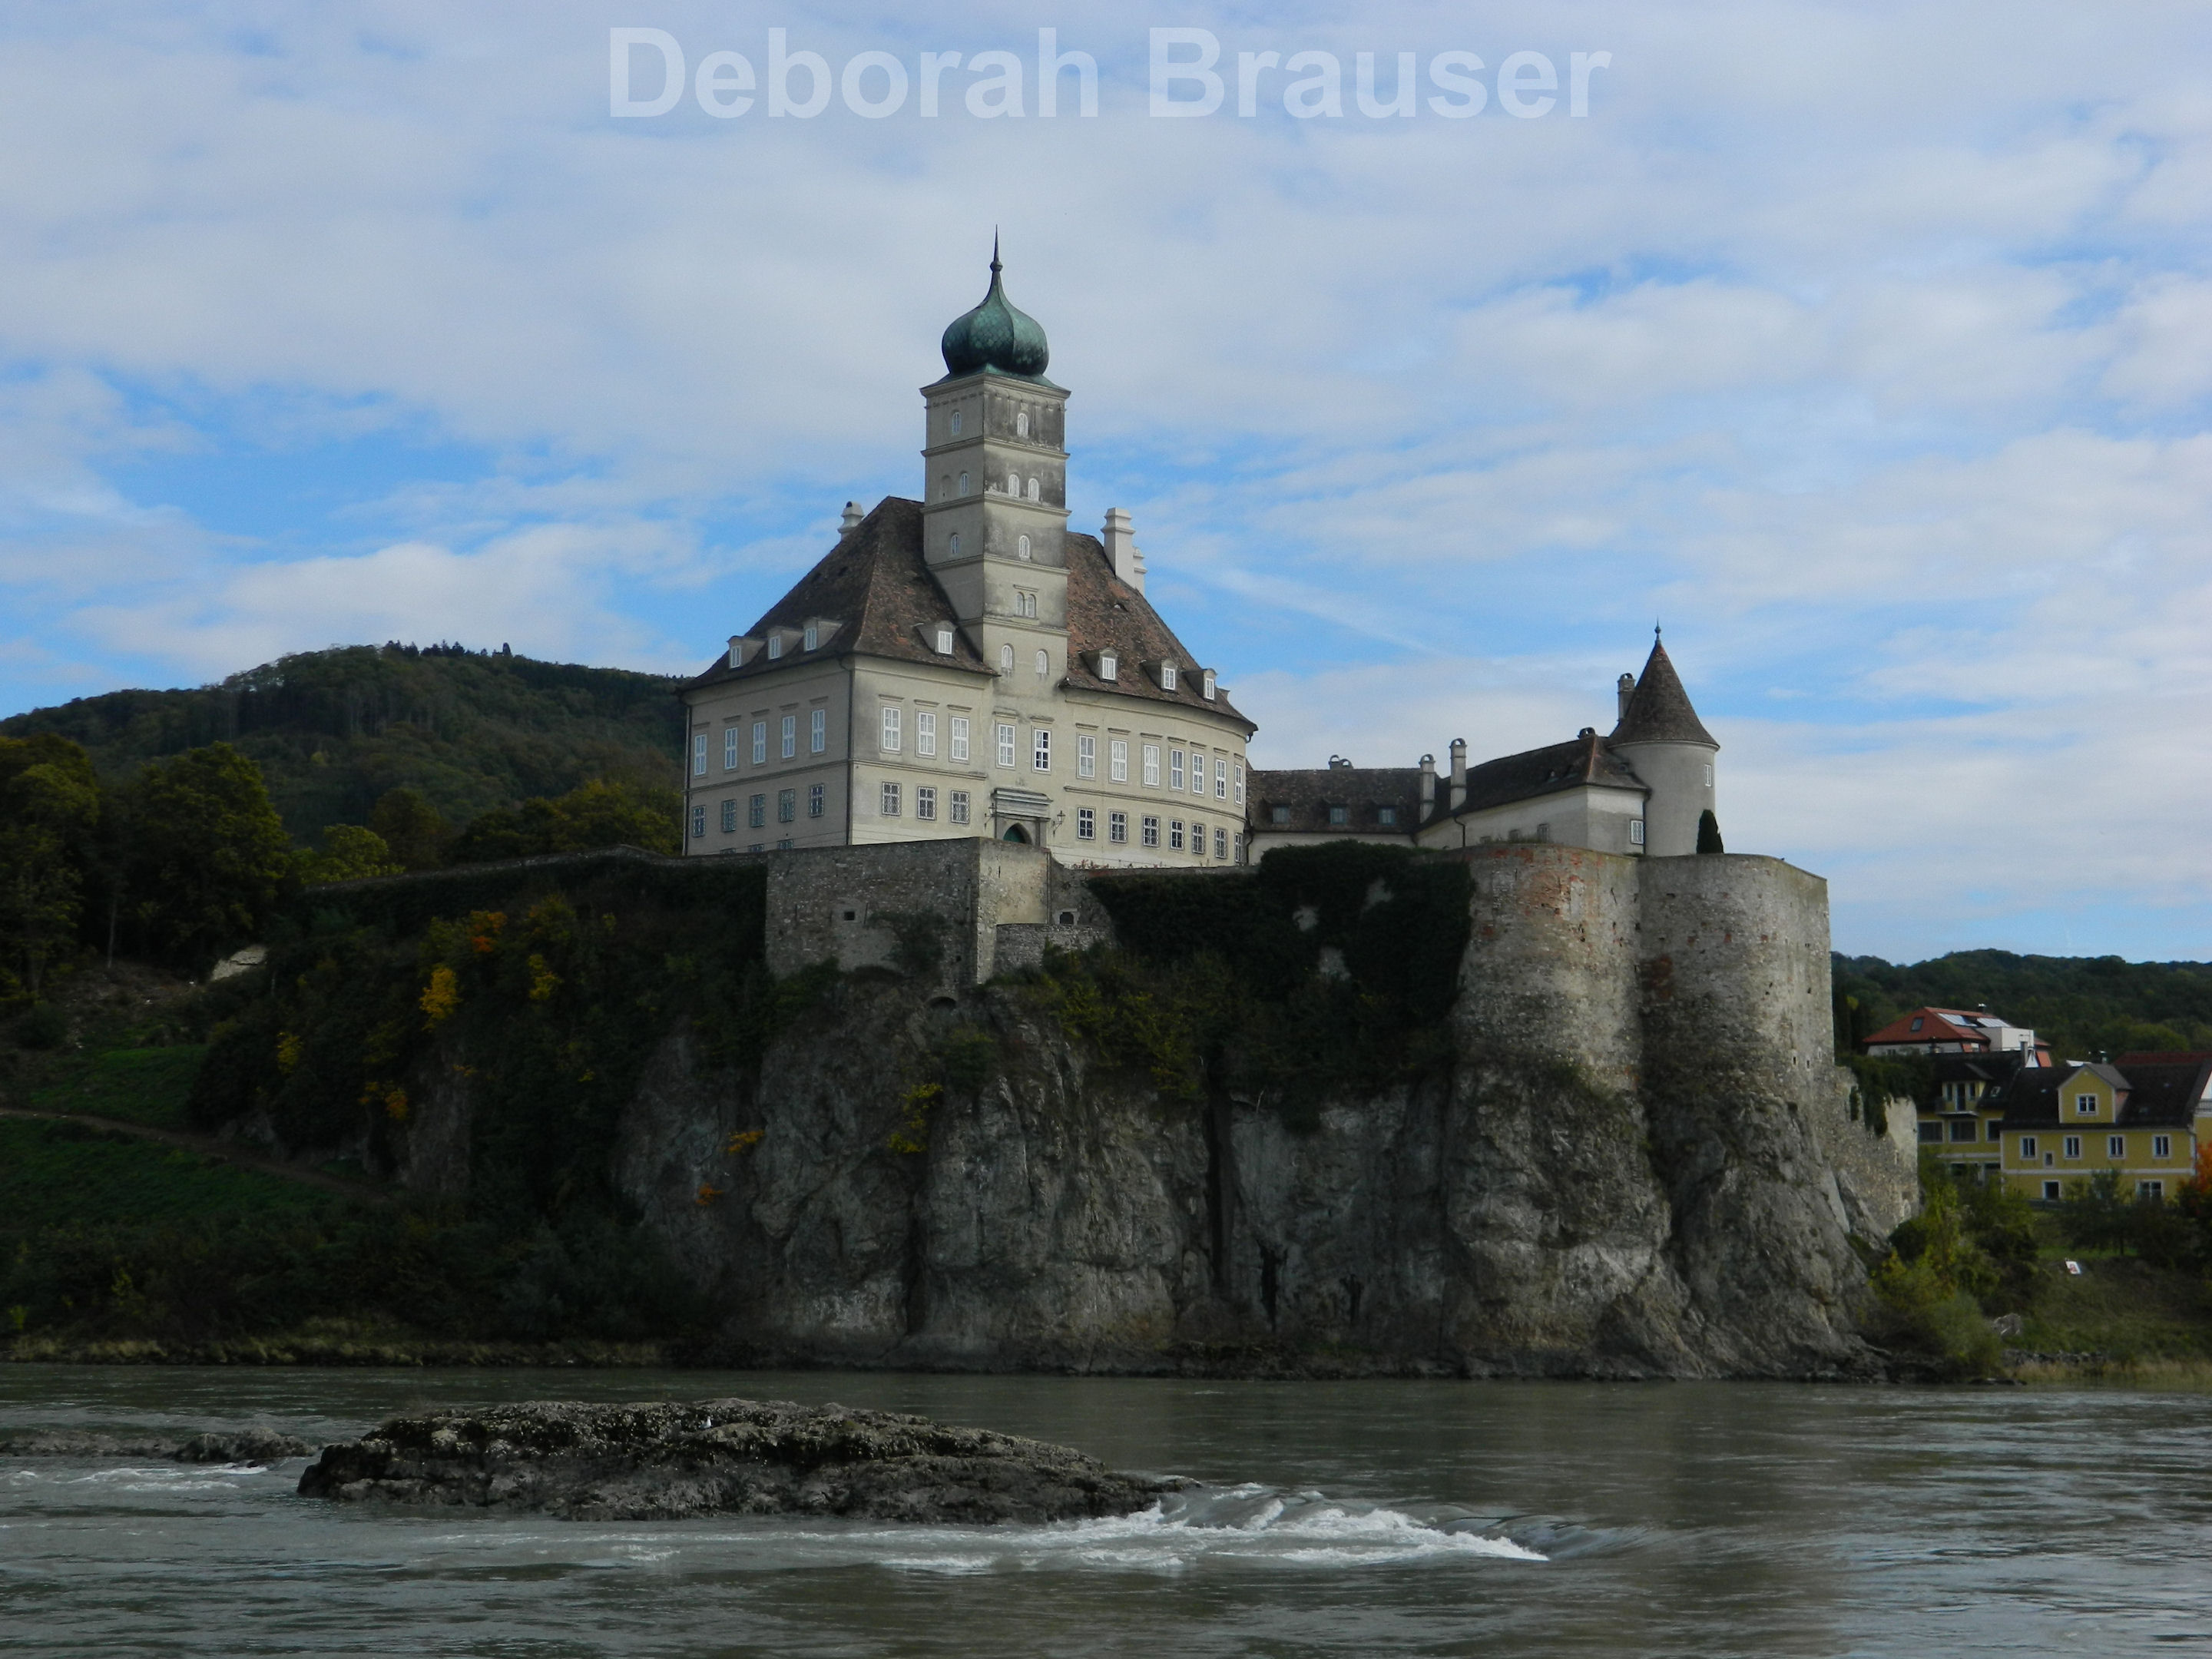 The Schonbuhel Castle in Austria